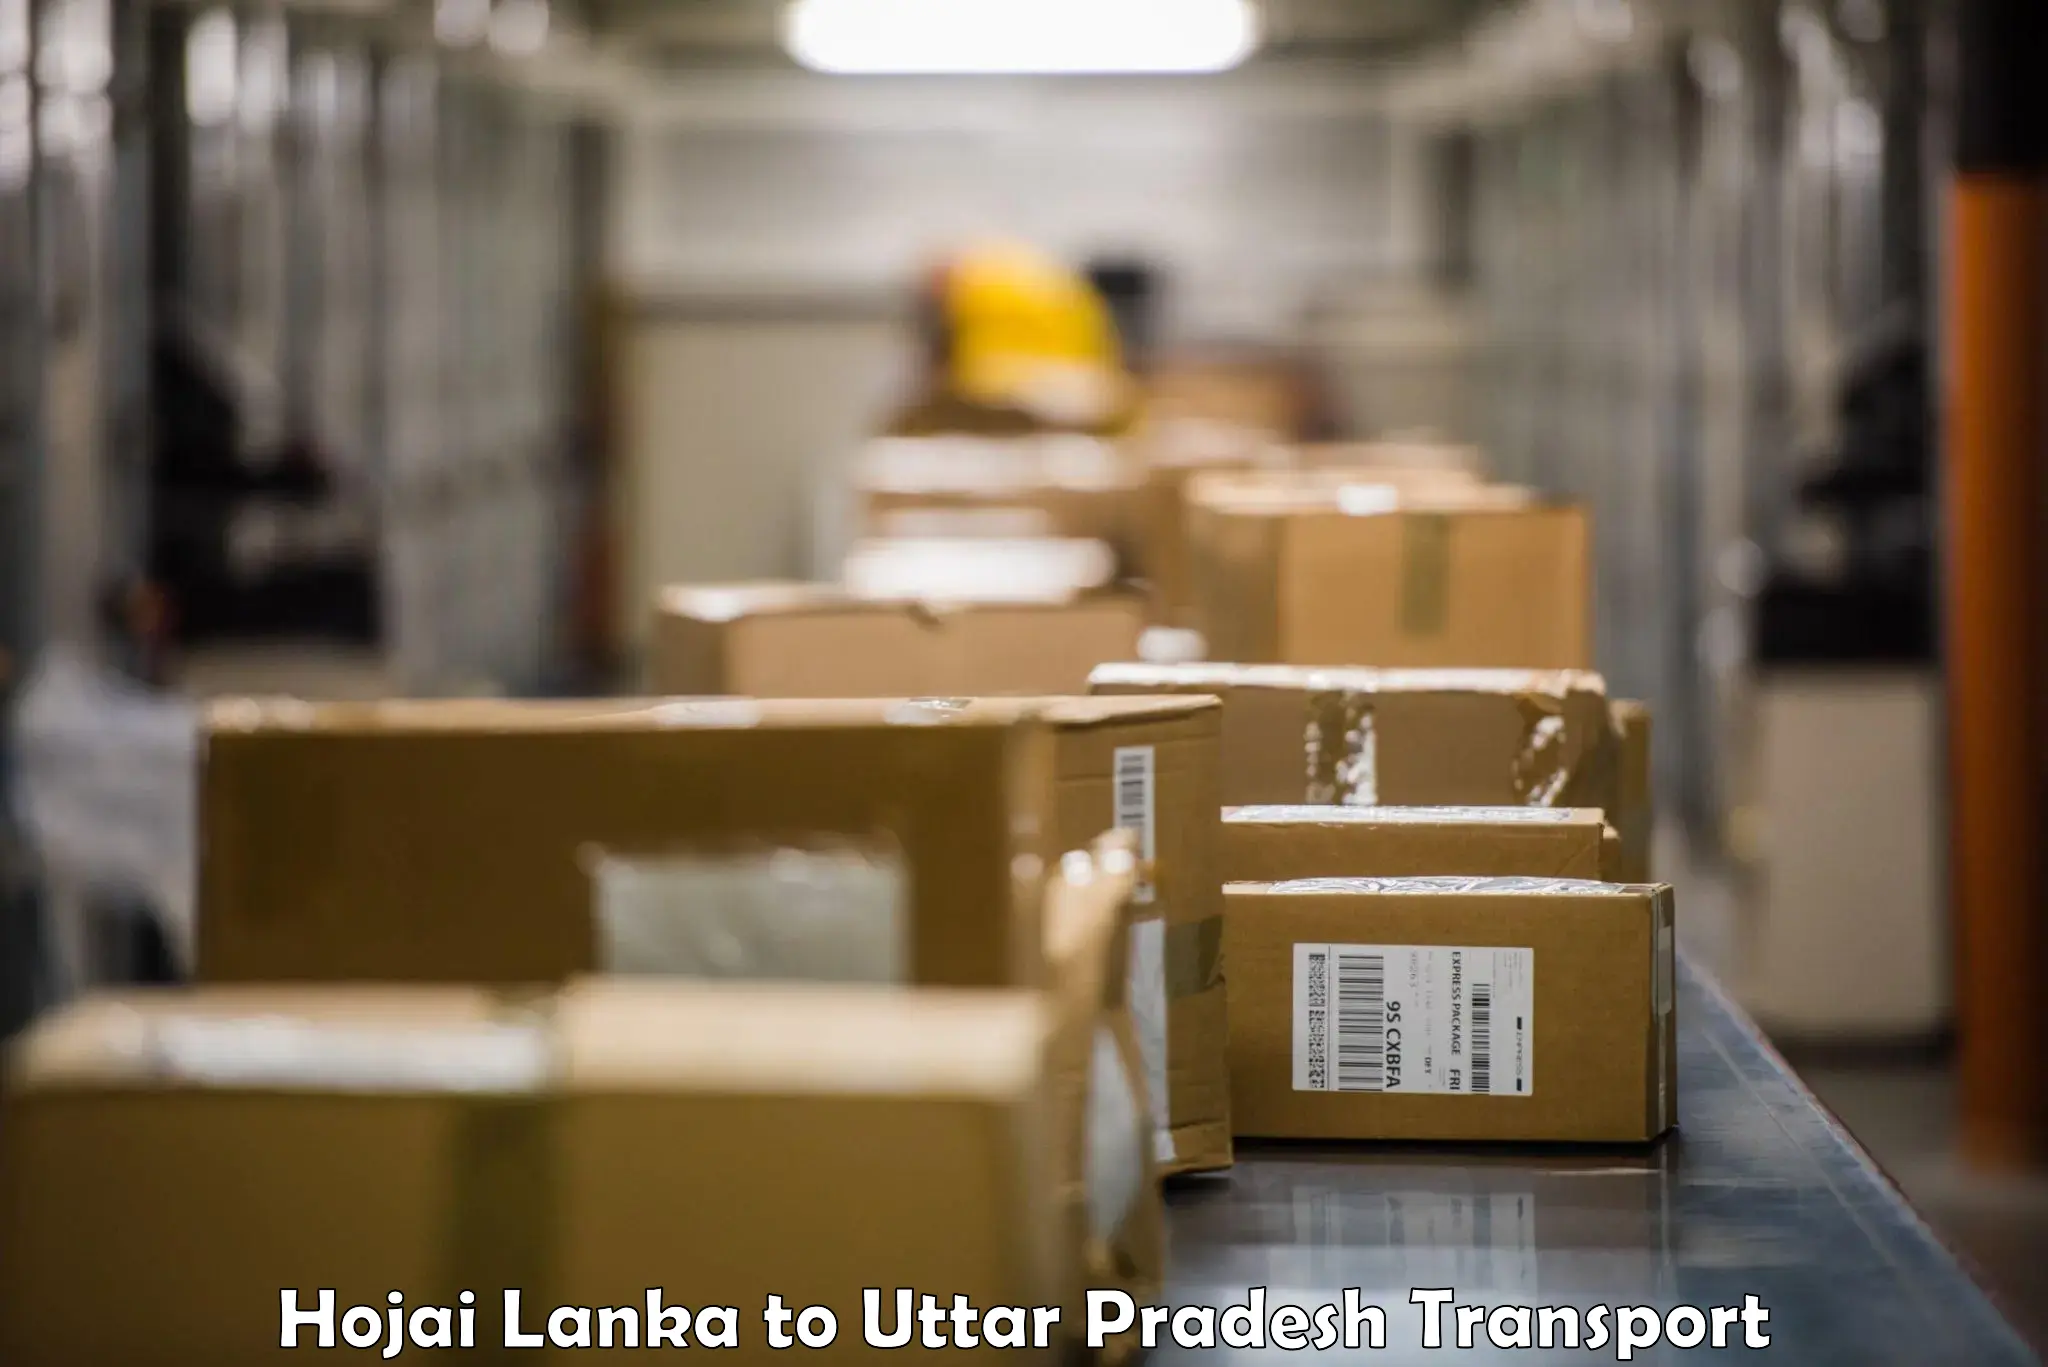 Truck transport companies in India Hojai Lanka to Kasganj